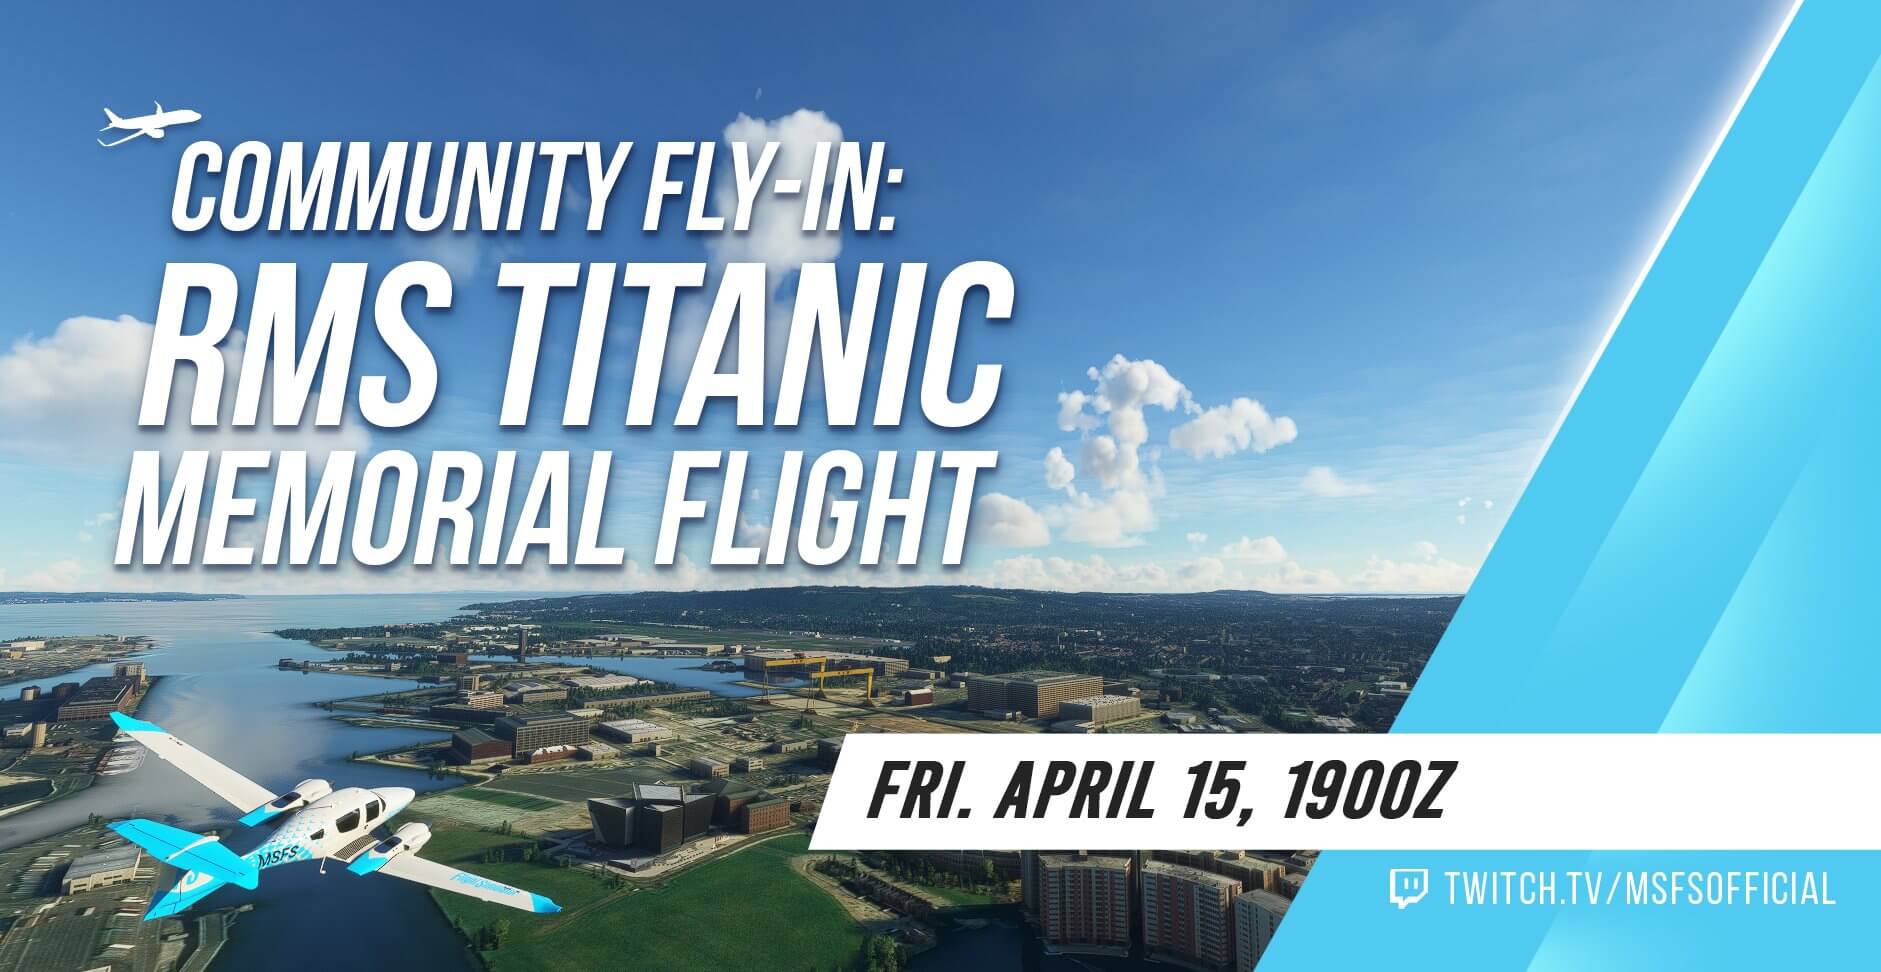 Community Fly In RMS Titanic Memorial Flight - Friday April 15 at 1900Z